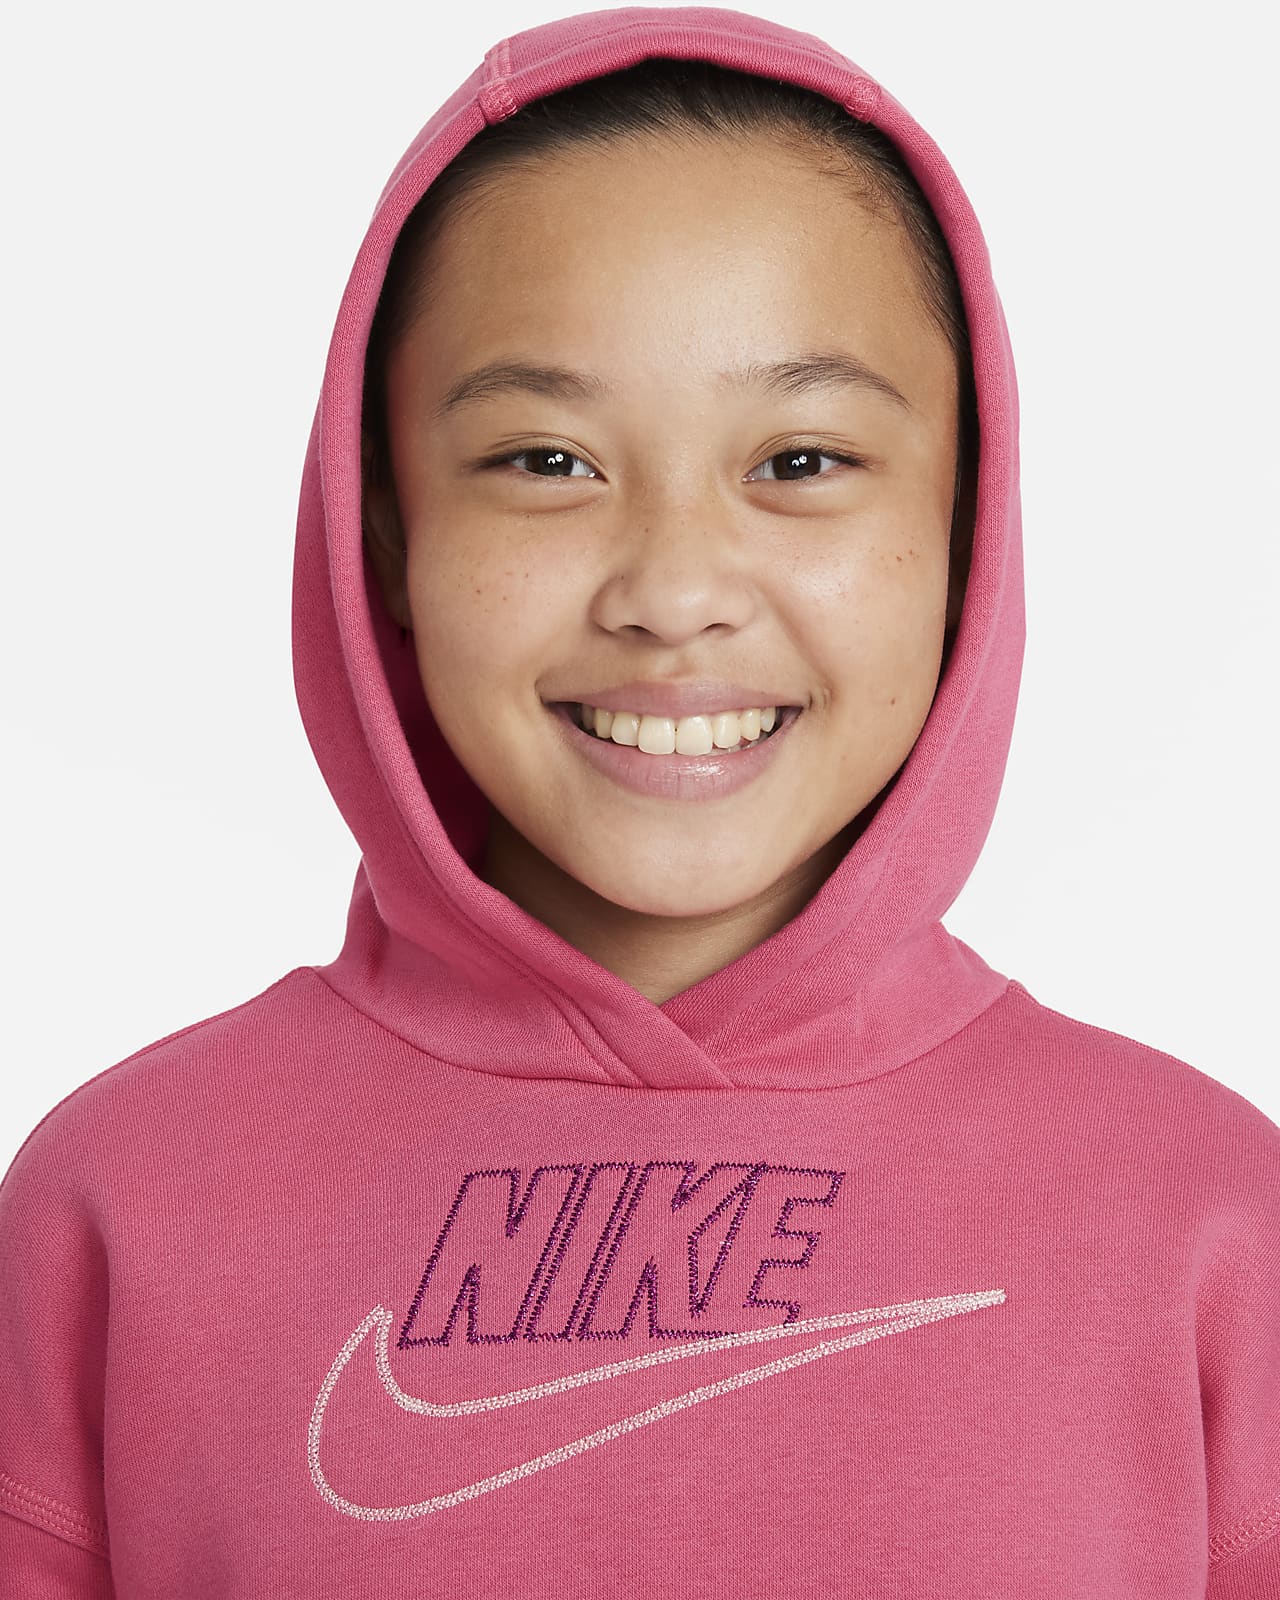 Nike Models Kids | sites.unimi.it